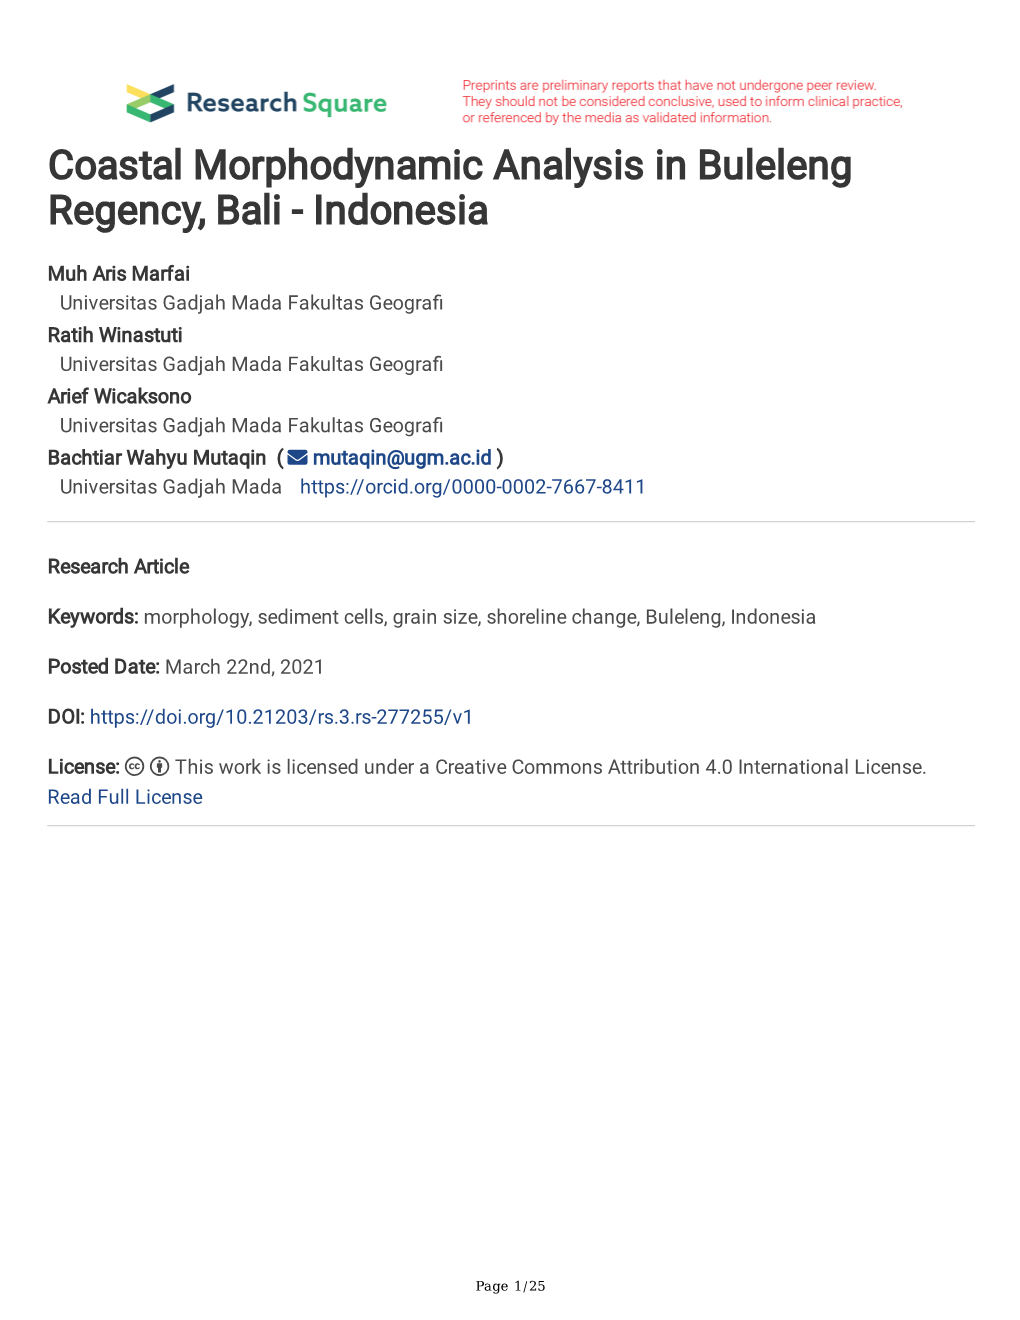 Coastal Morphodynamic Analysis in Buleleng Regency, Bali - Indonesia